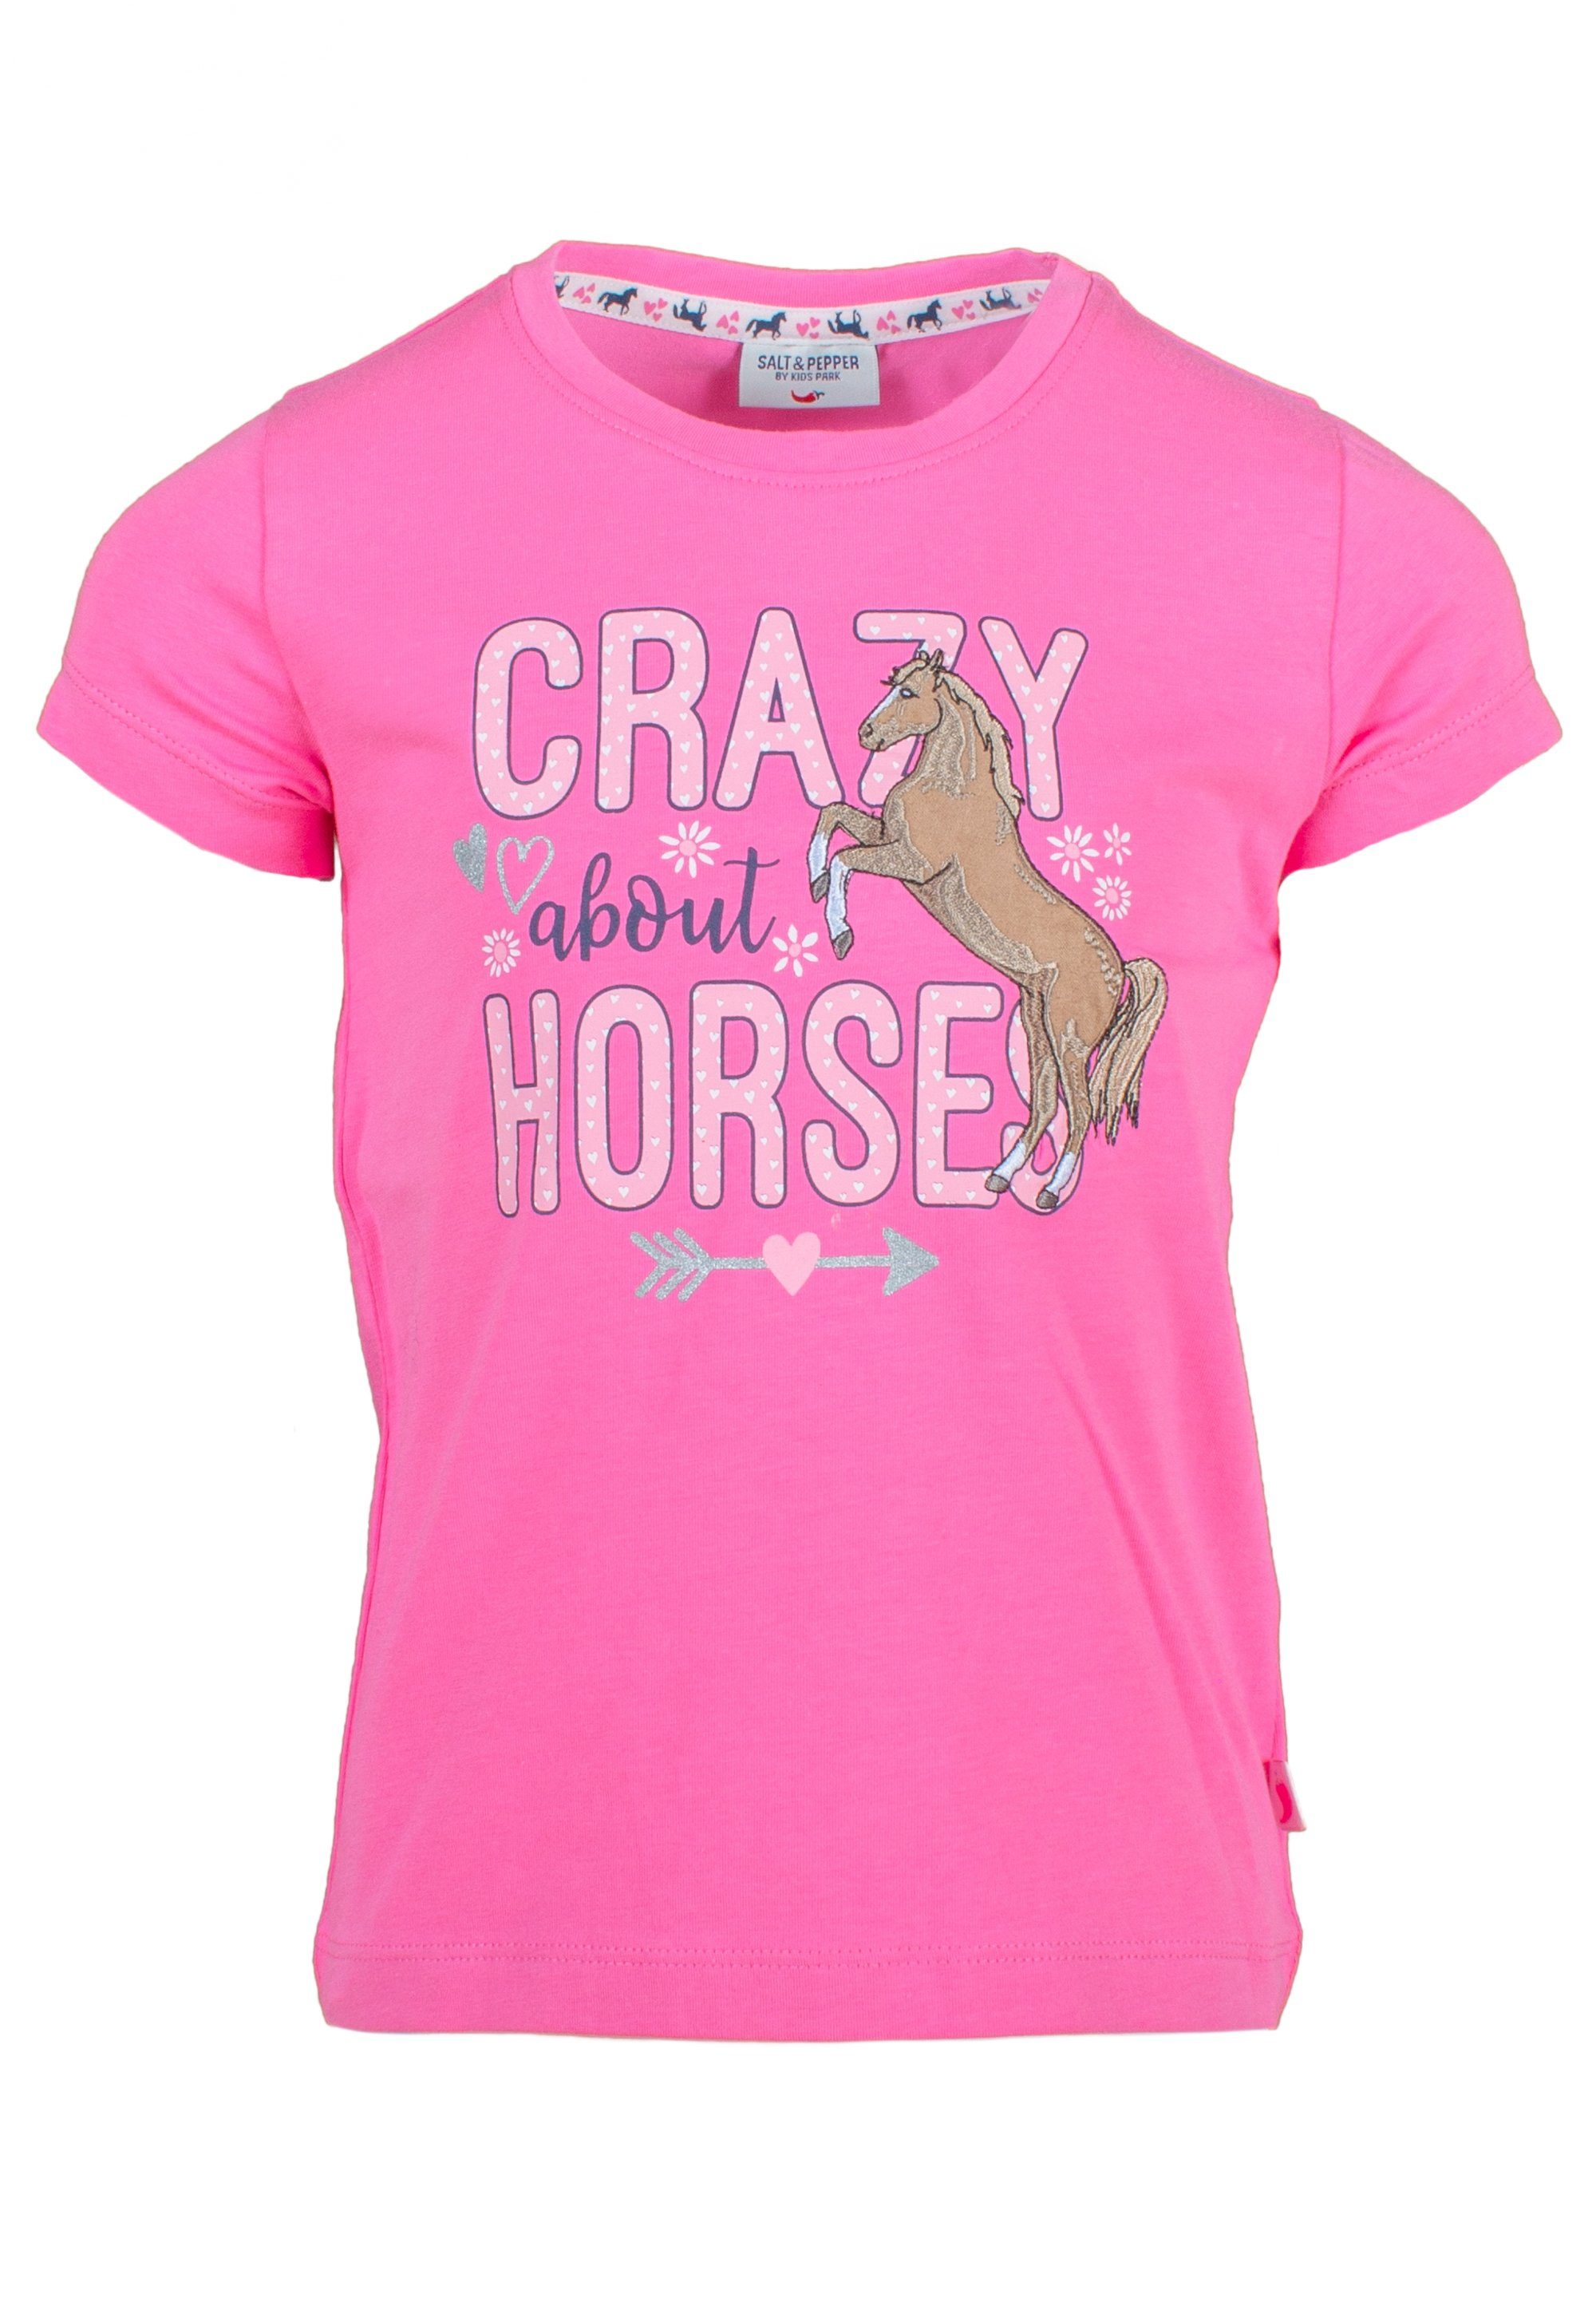 pink, (2-tlg) AND PEPPER Horses schönen Crazy T-Shirt mit SALT rosa Pferde-Motiven